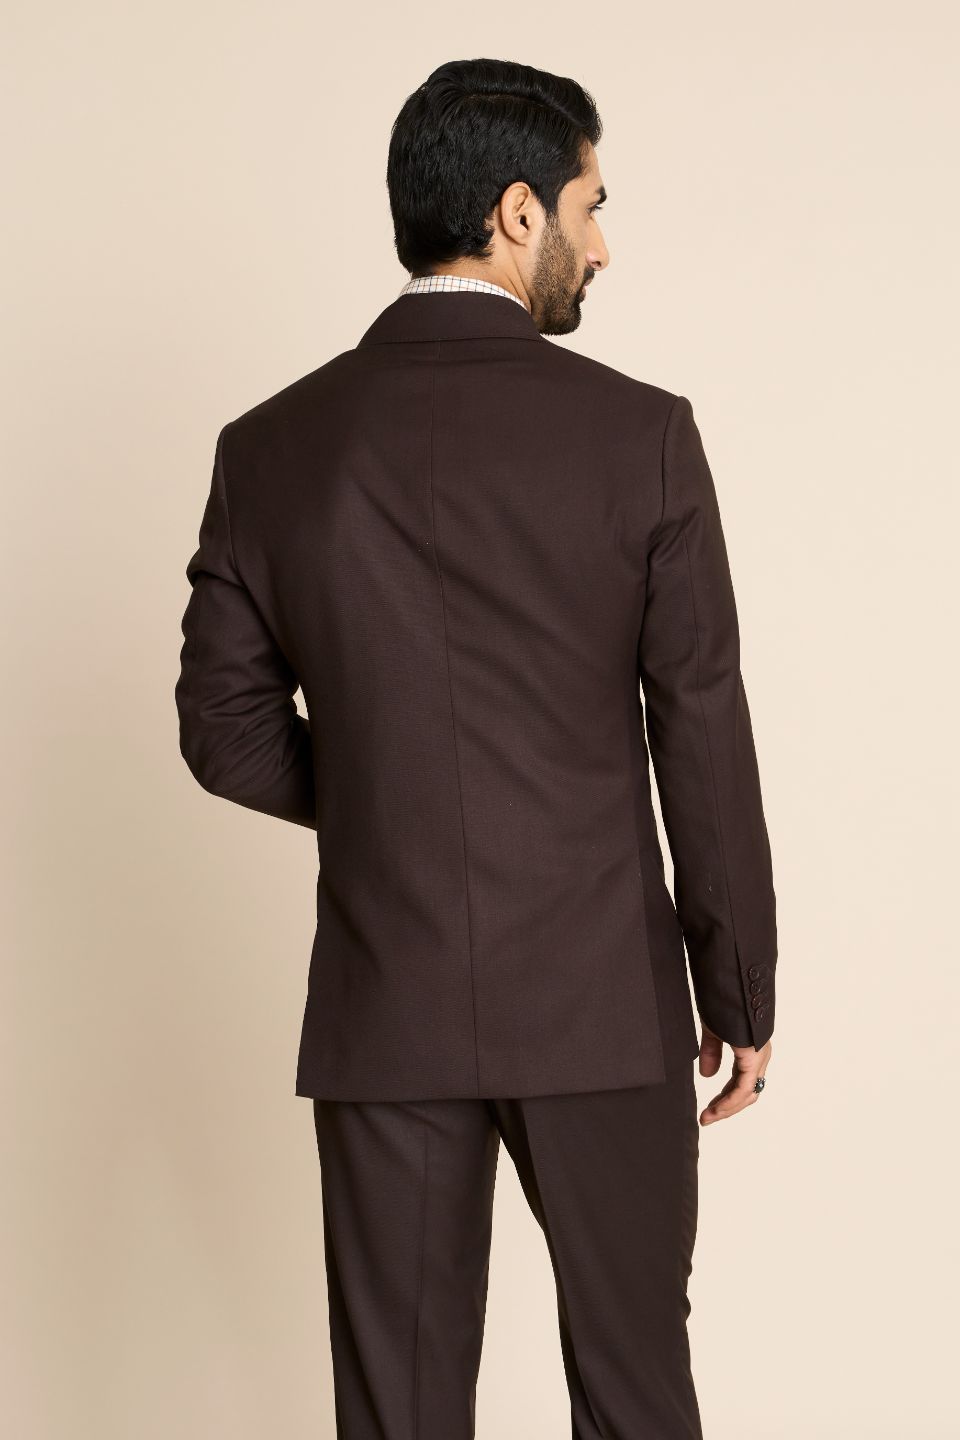 Milano Plaid Brown Suit